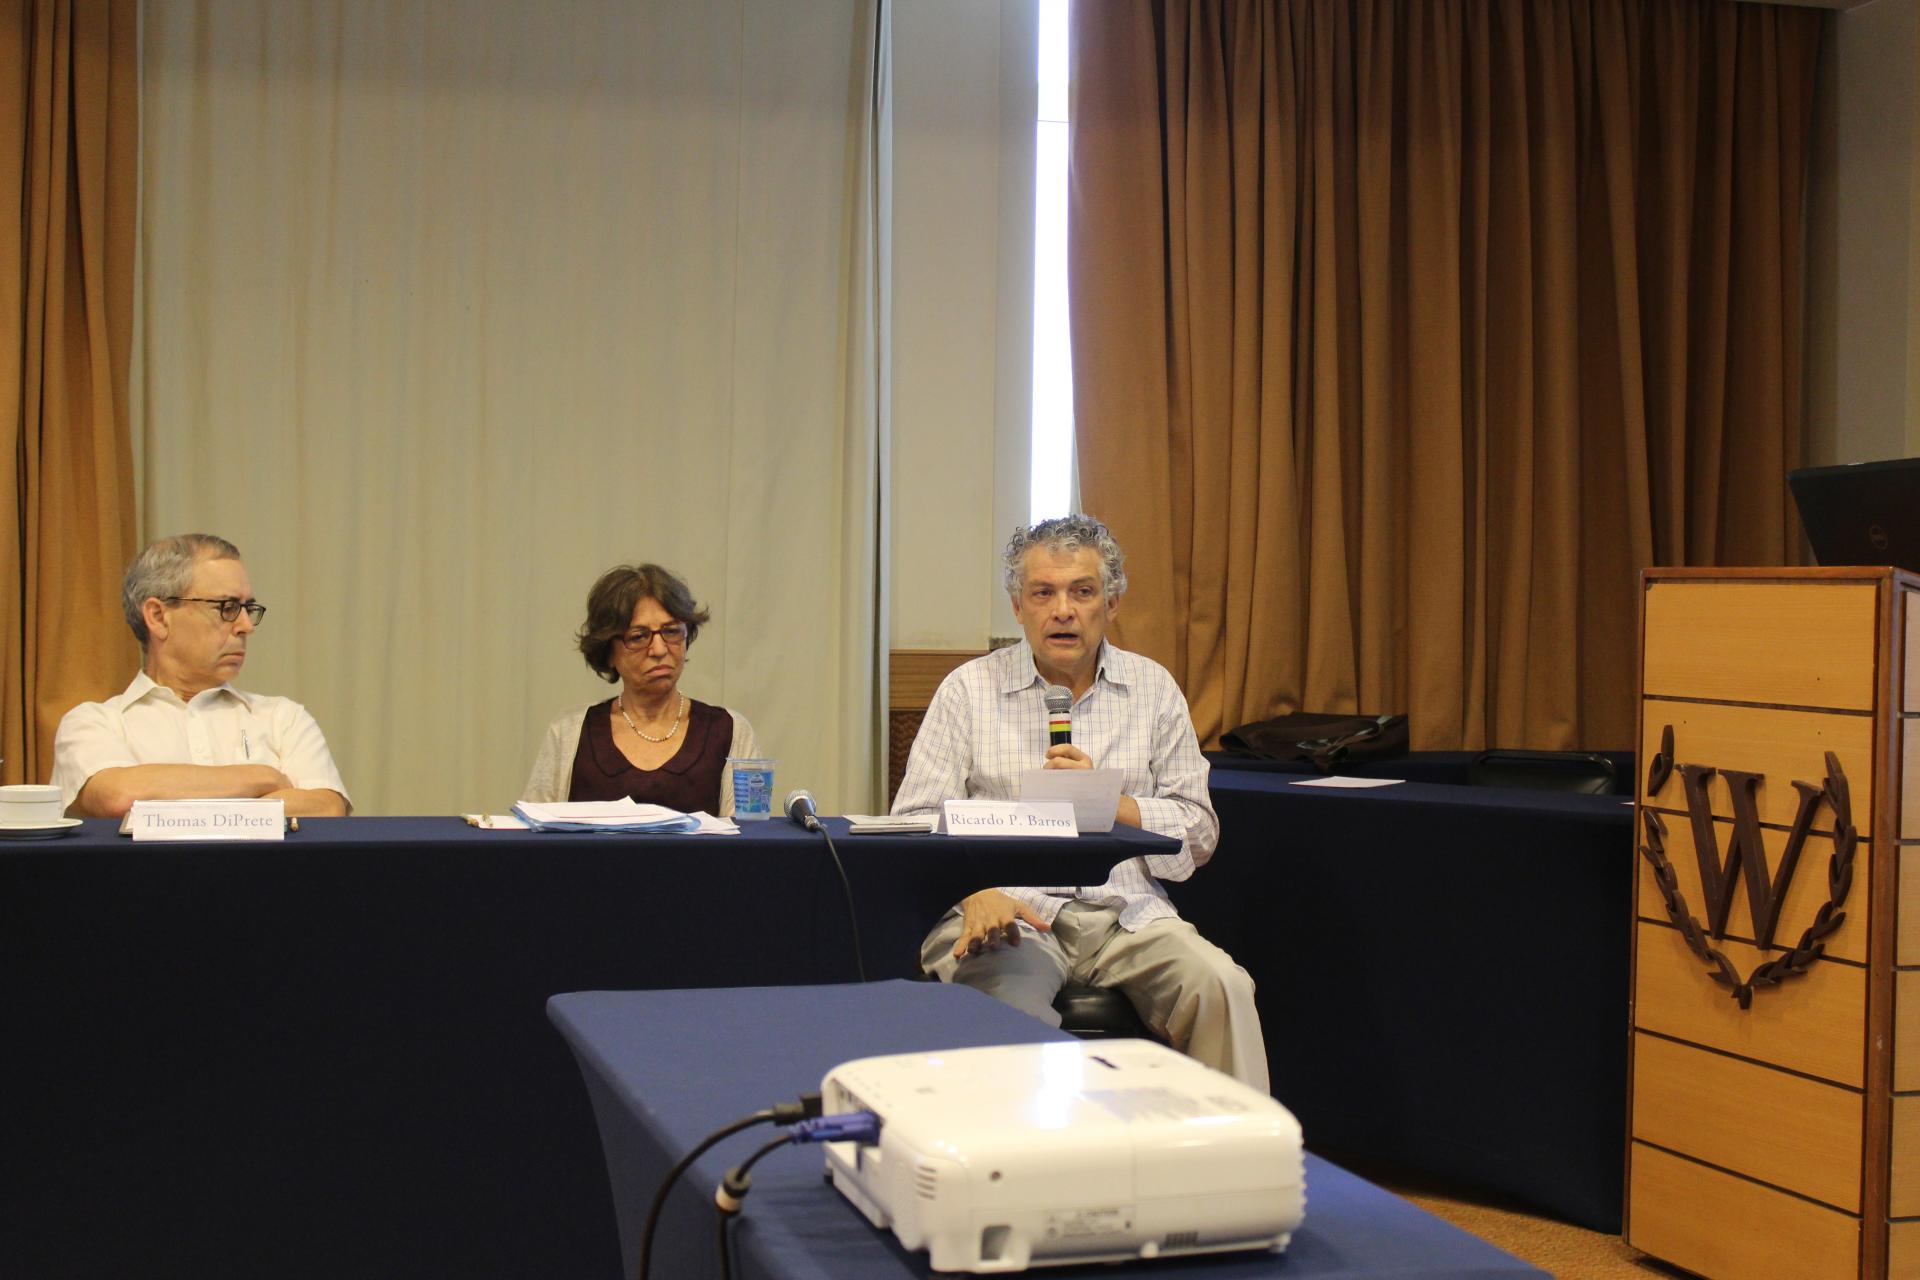  Professors Thomas DiPrete, Elisa Reis and economist Ricardo Paes de Barros